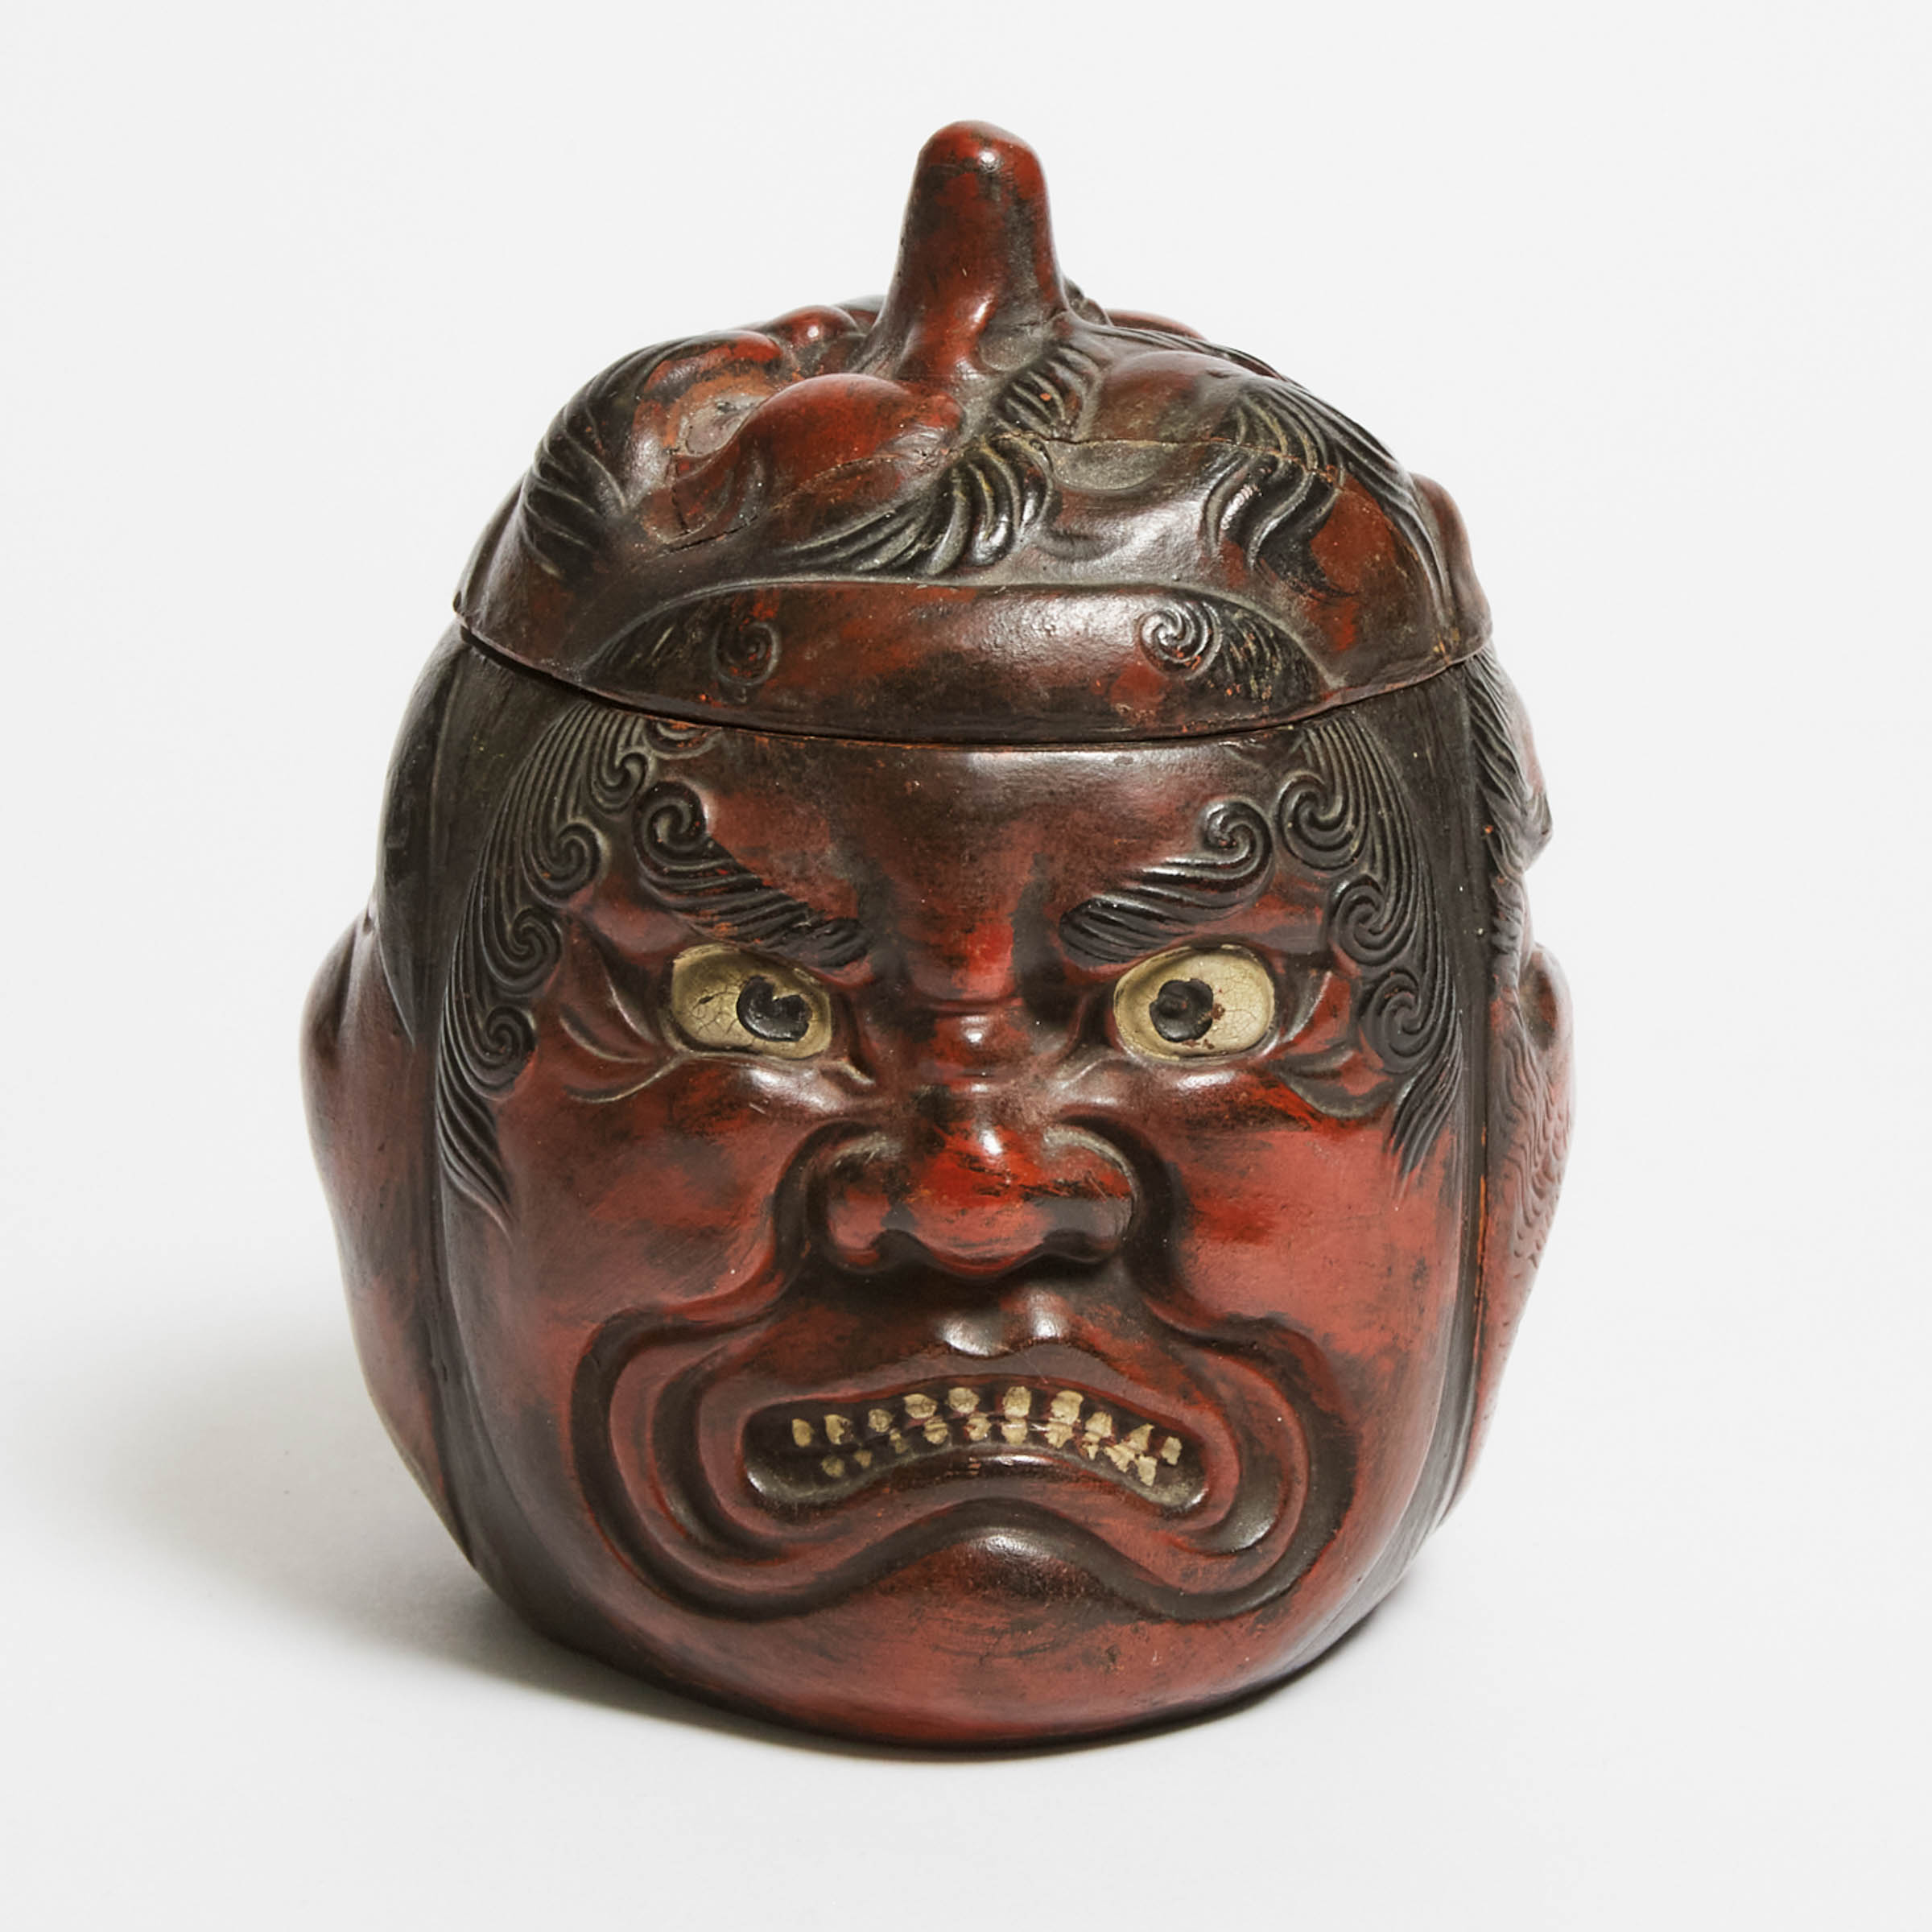 A Japanese Lacquer-Imitation Stoneware Tobacco Humidor, 19th Century